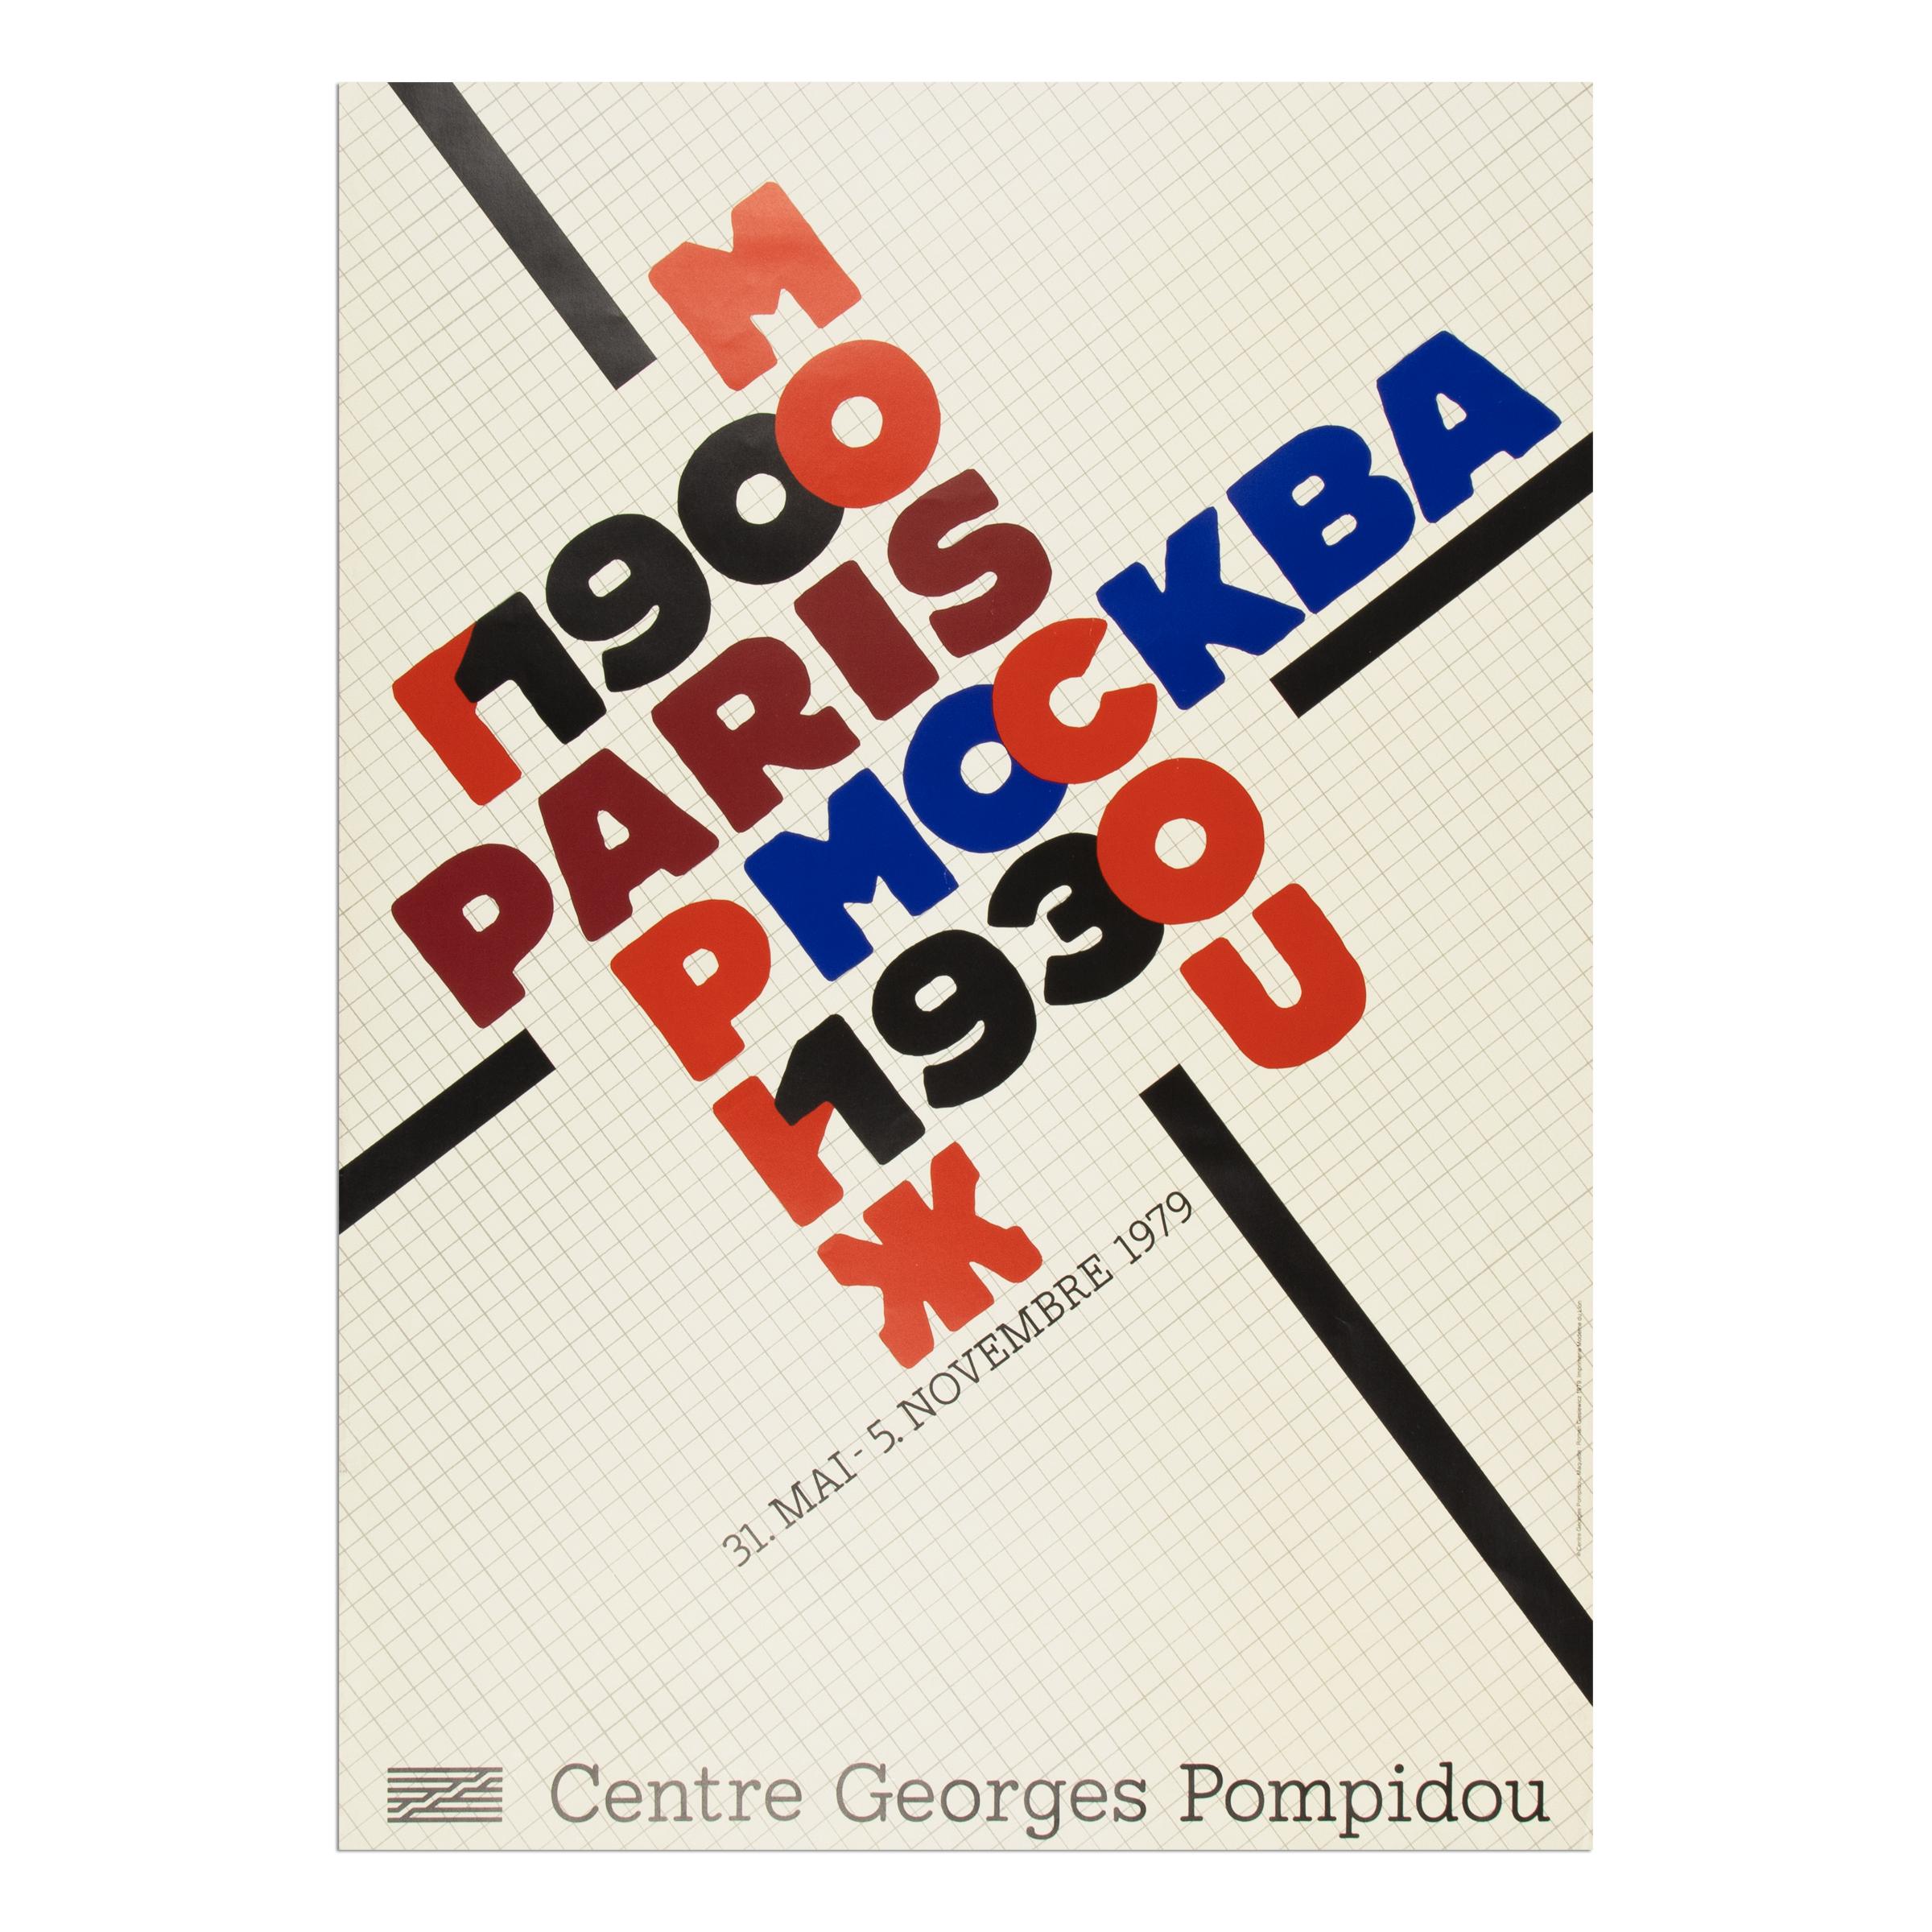 Paris-Moscou 1900-1930, Centre Pompidou: Original Exhibition Poster from 1979 - Print by Roman Cieslewicz